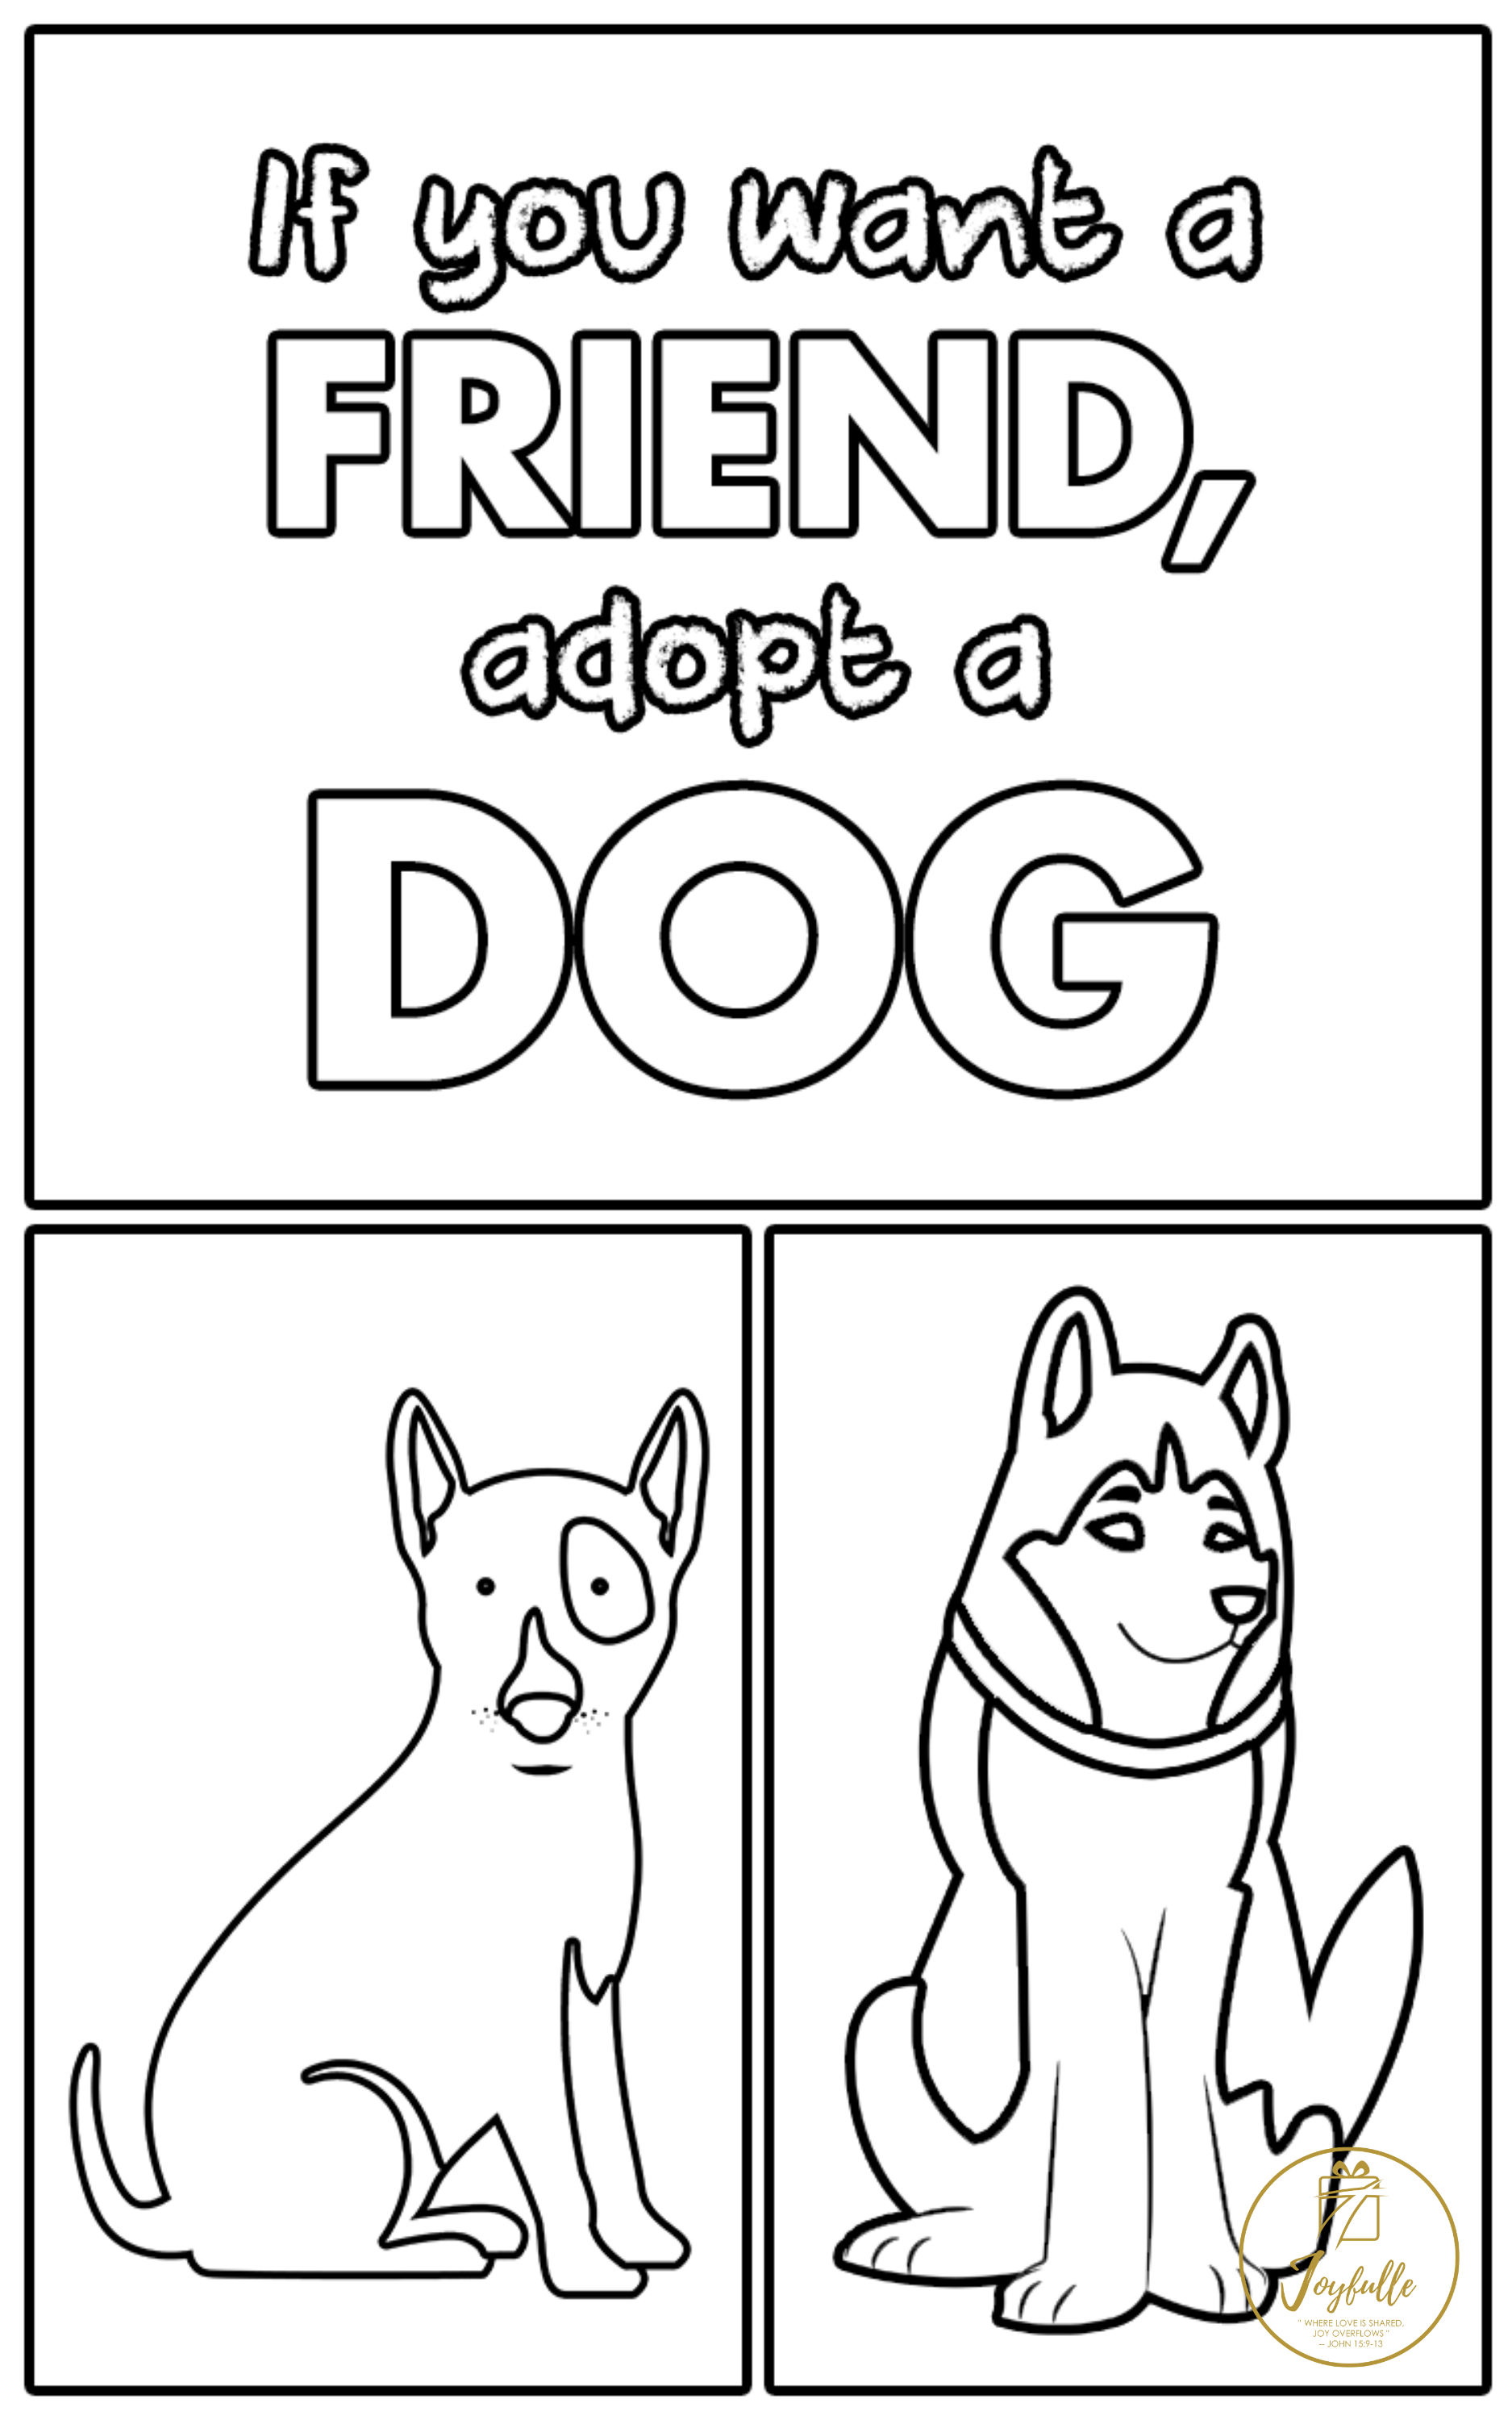 International Dog Day Greeting Card 13